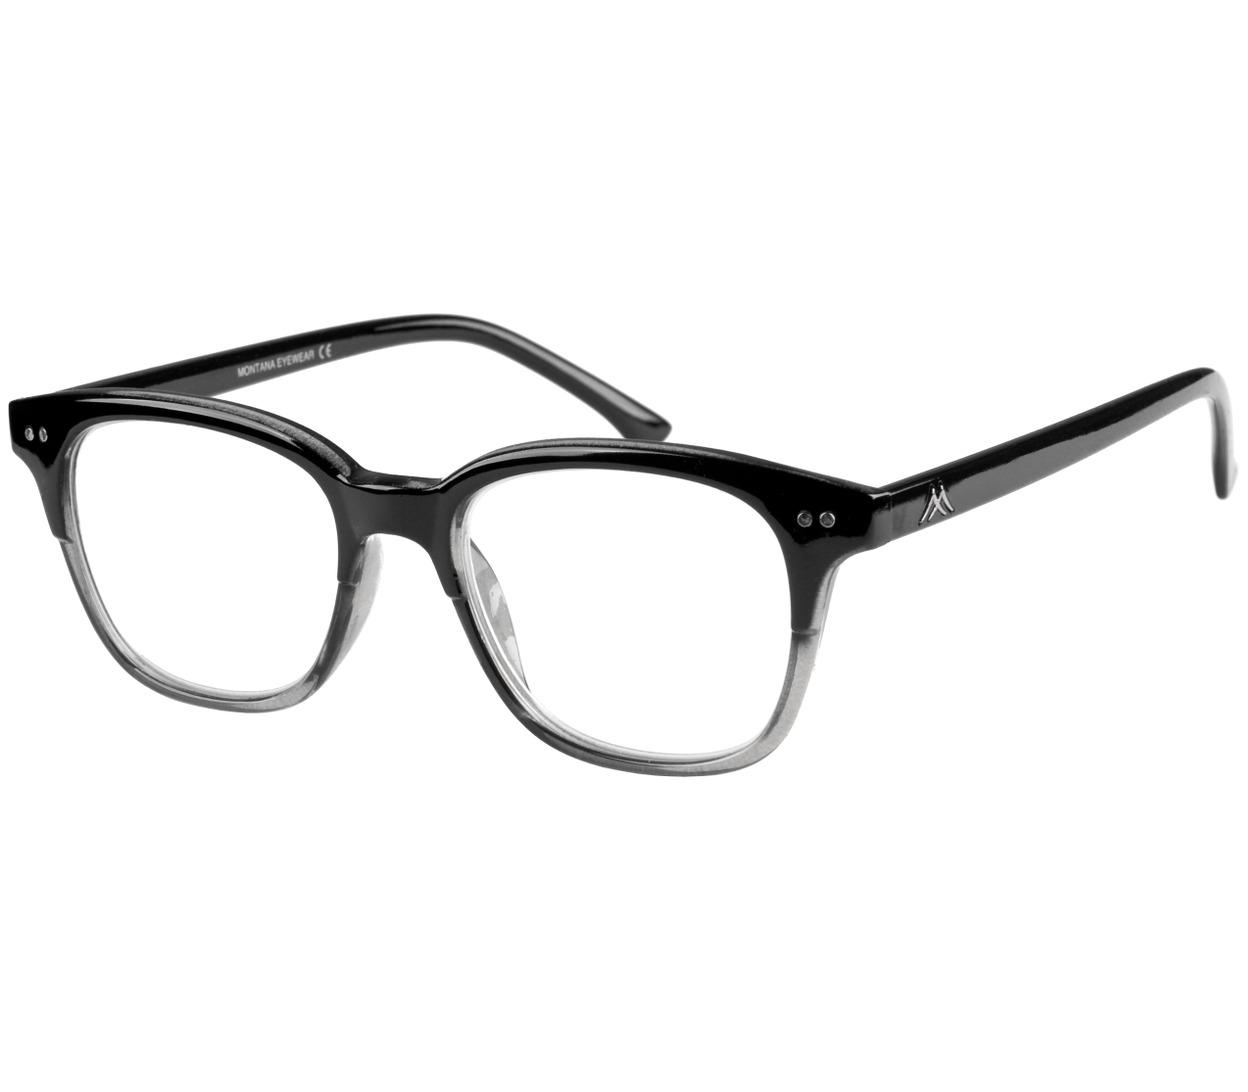 Clark (Black) Reading Glasses - Tiger Specs